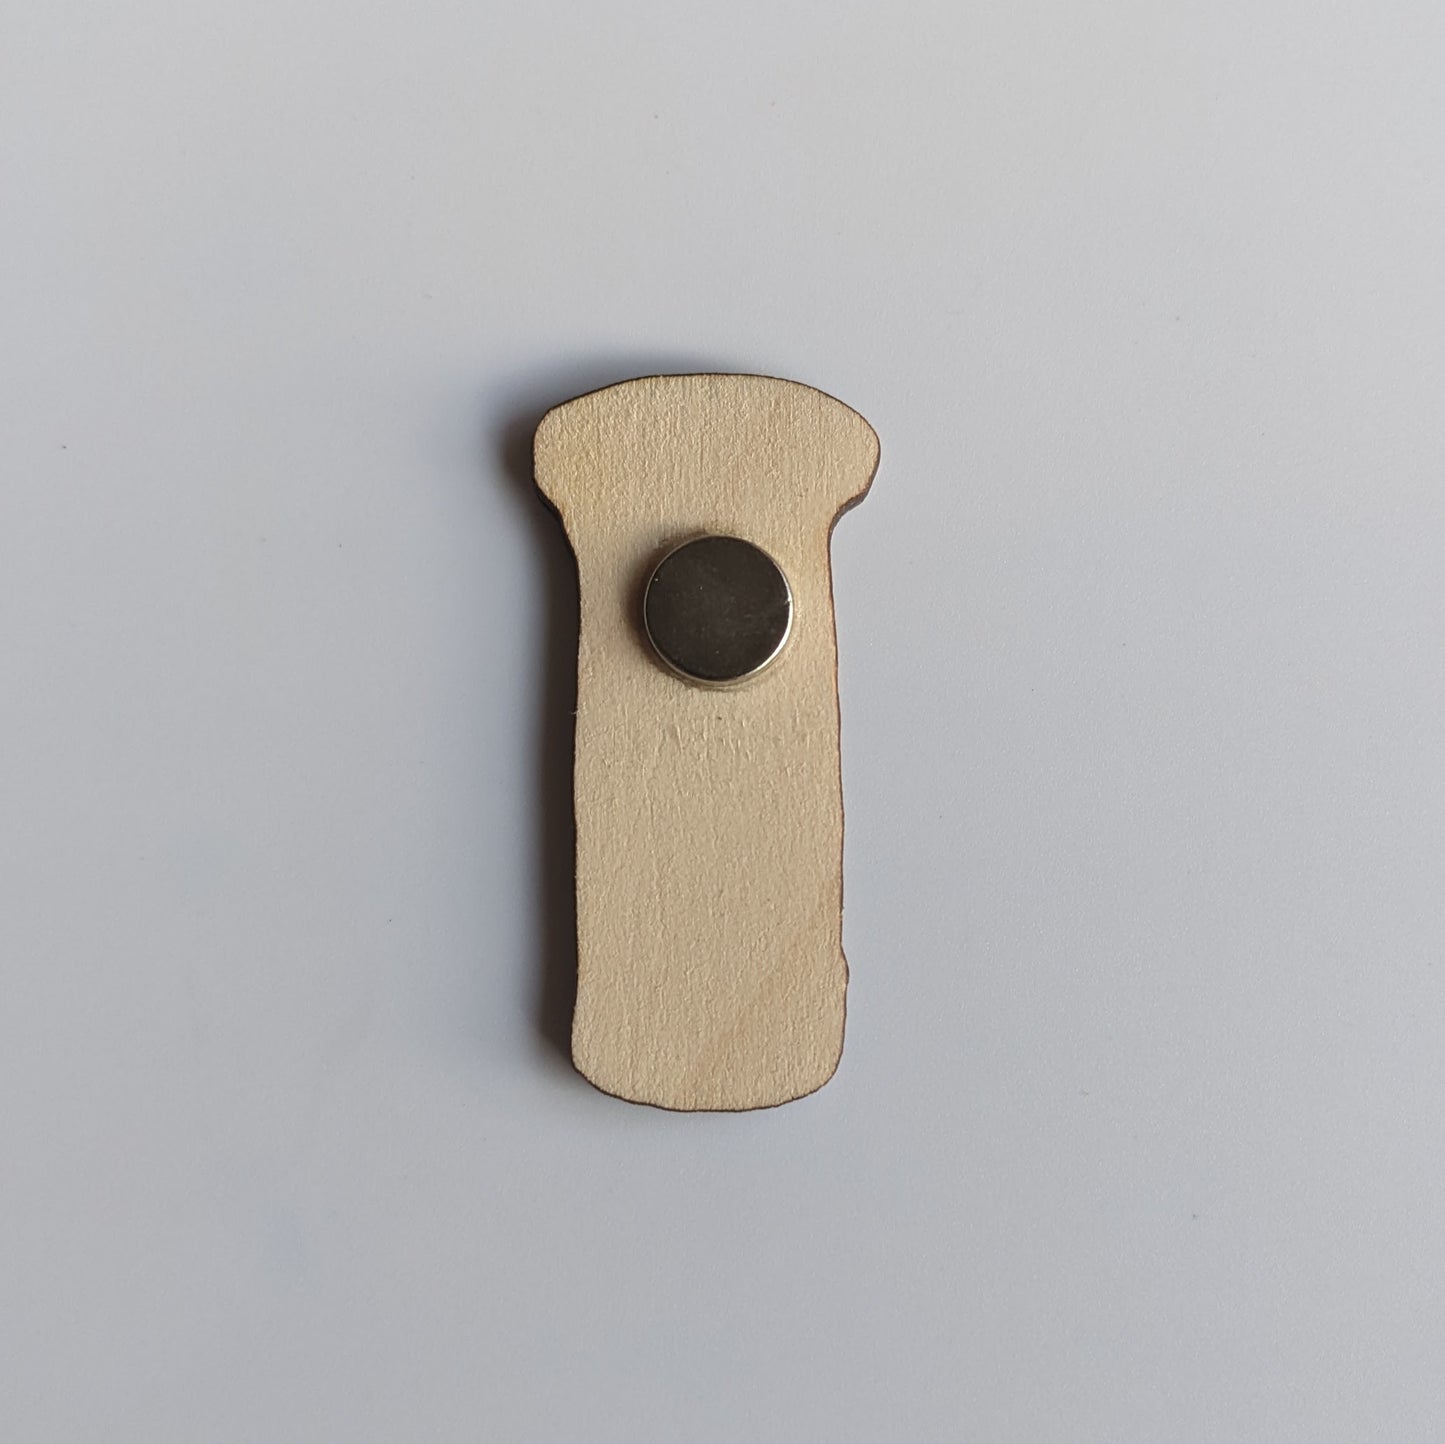 British "Post Box" Wooden Fridge Magnet